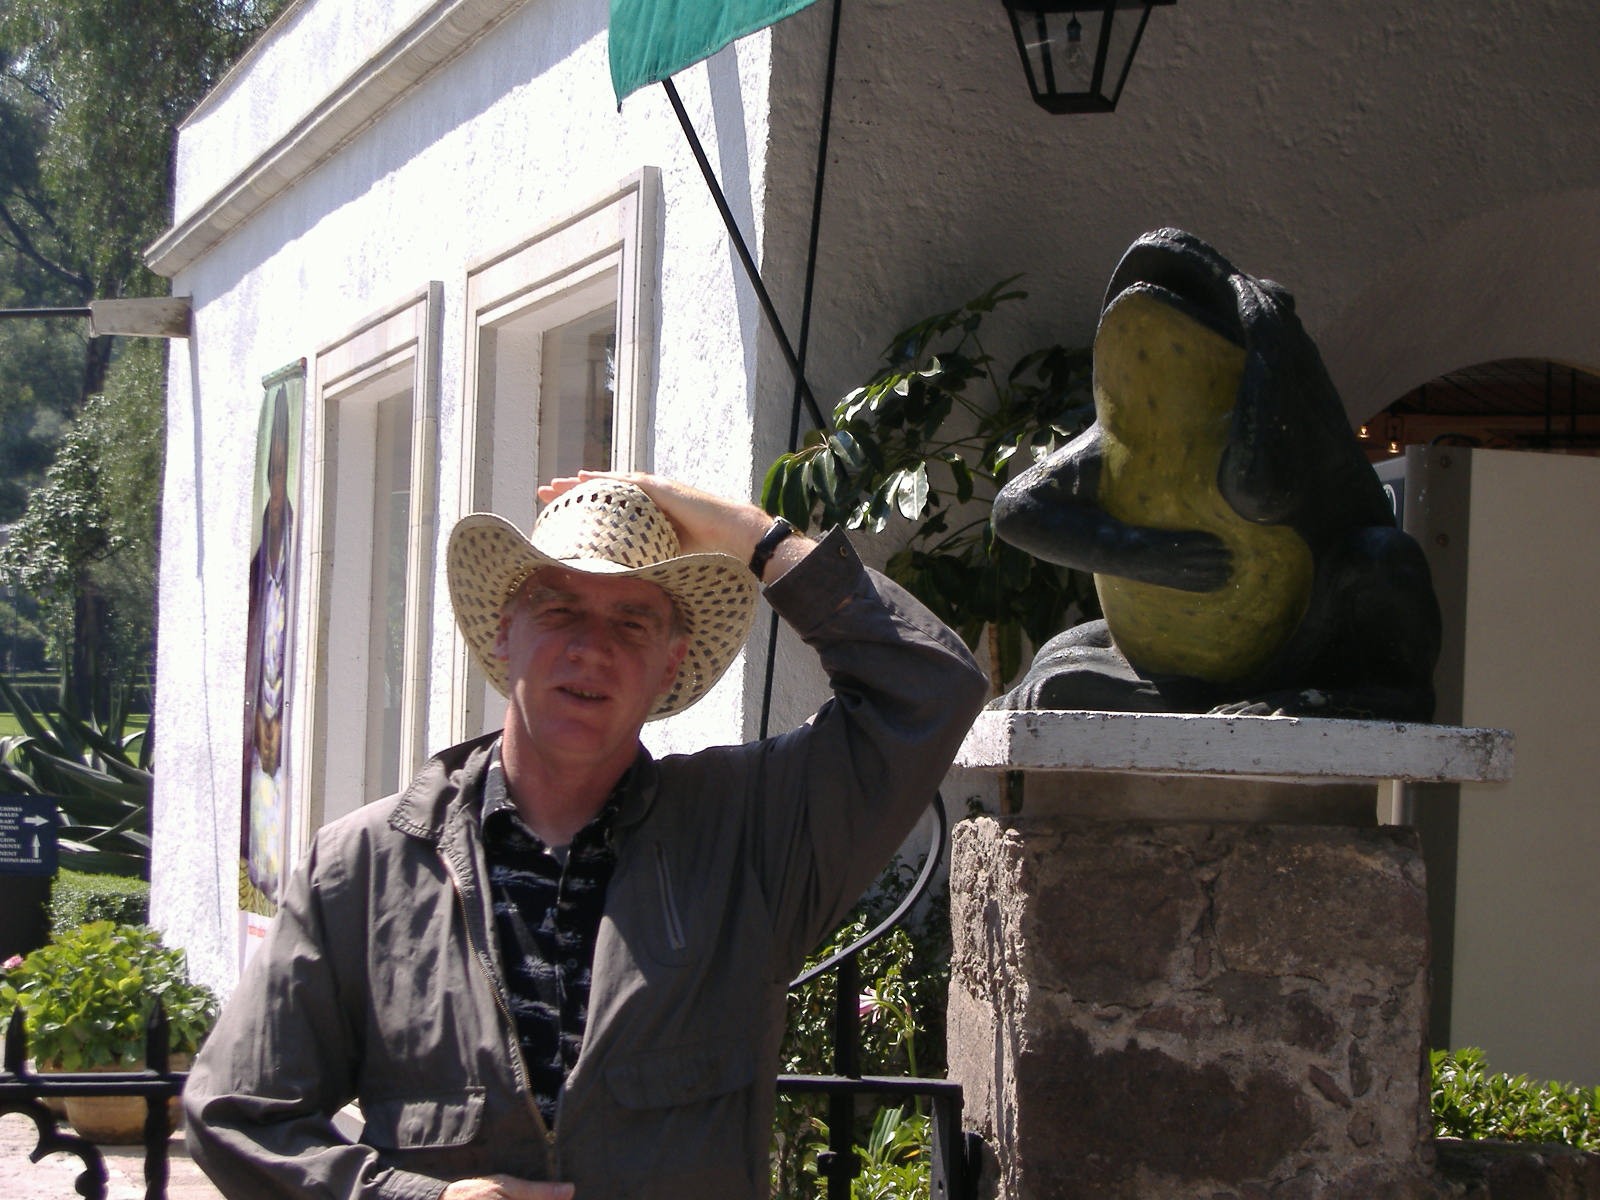 John Jenkinson with Frog